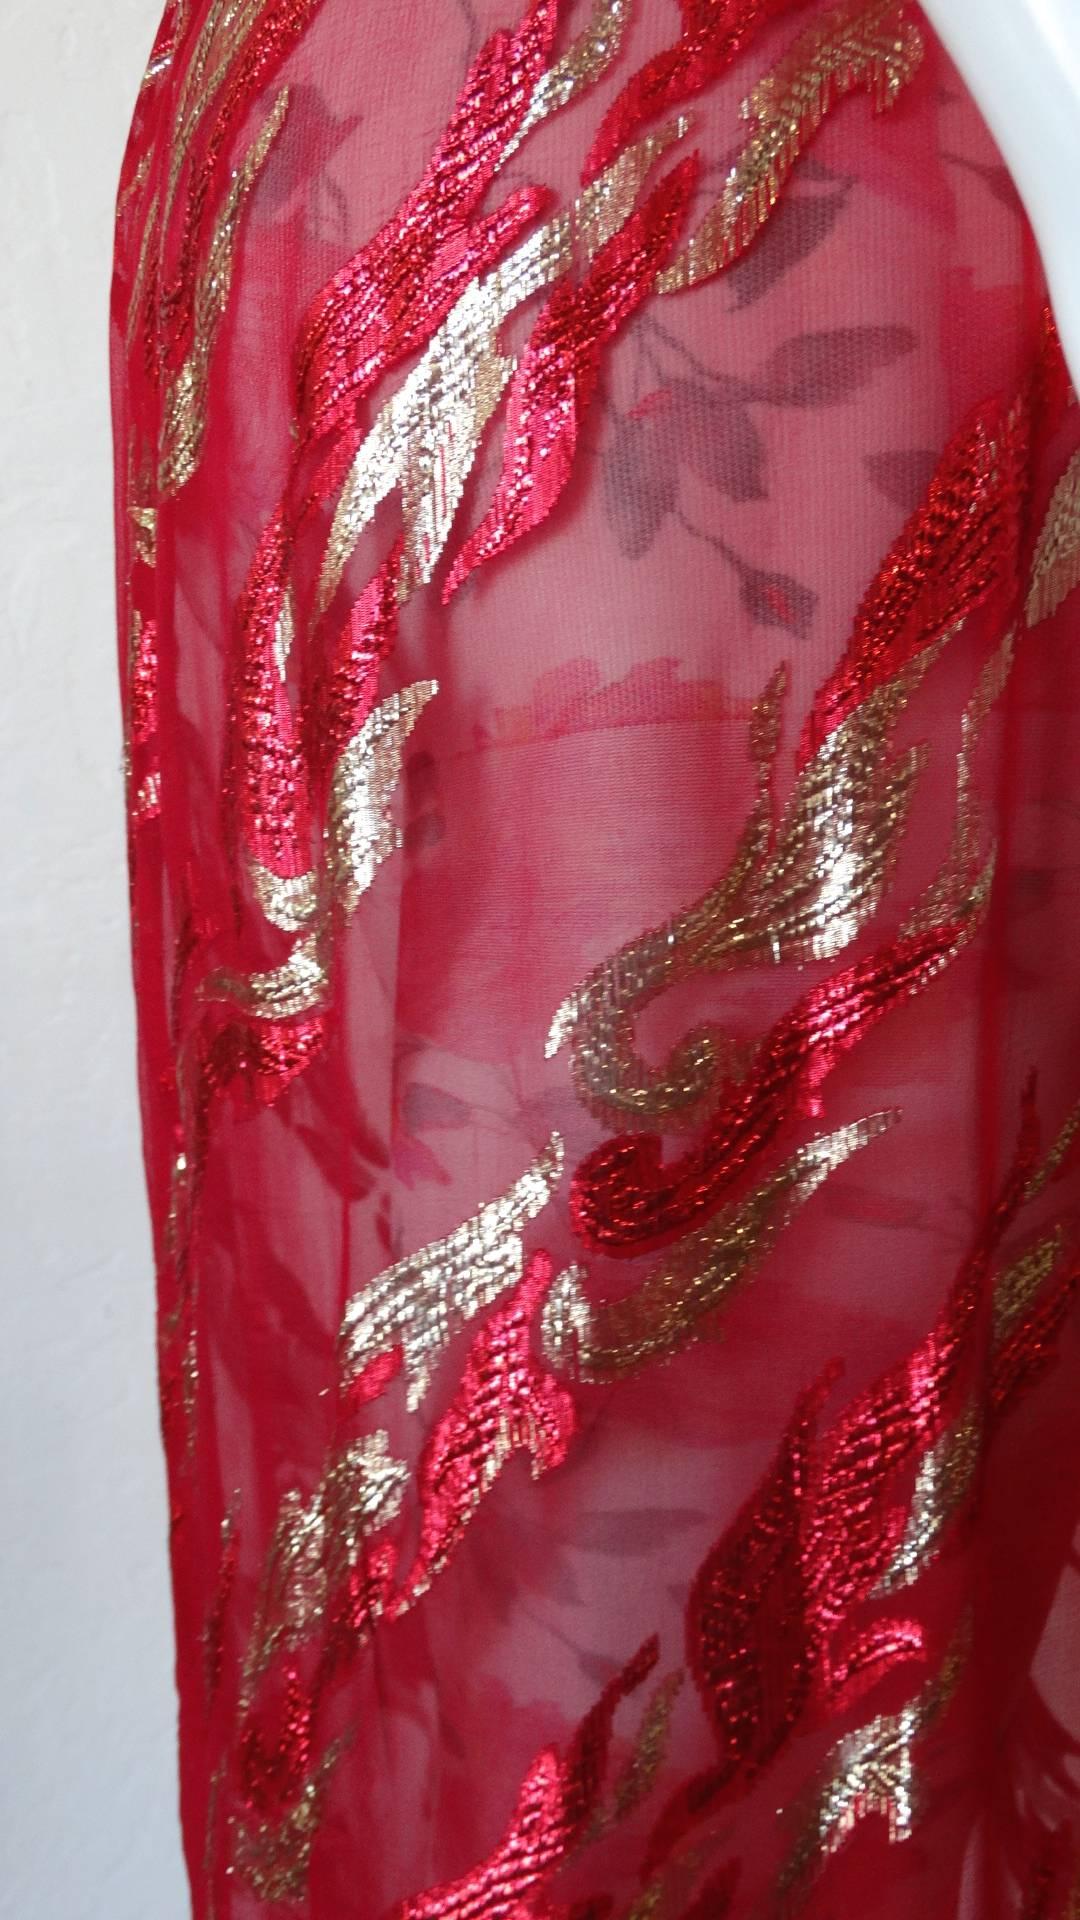 Saint Laurent Rive Gauche Red Sheer Printed Halter Dress, 1980s  4